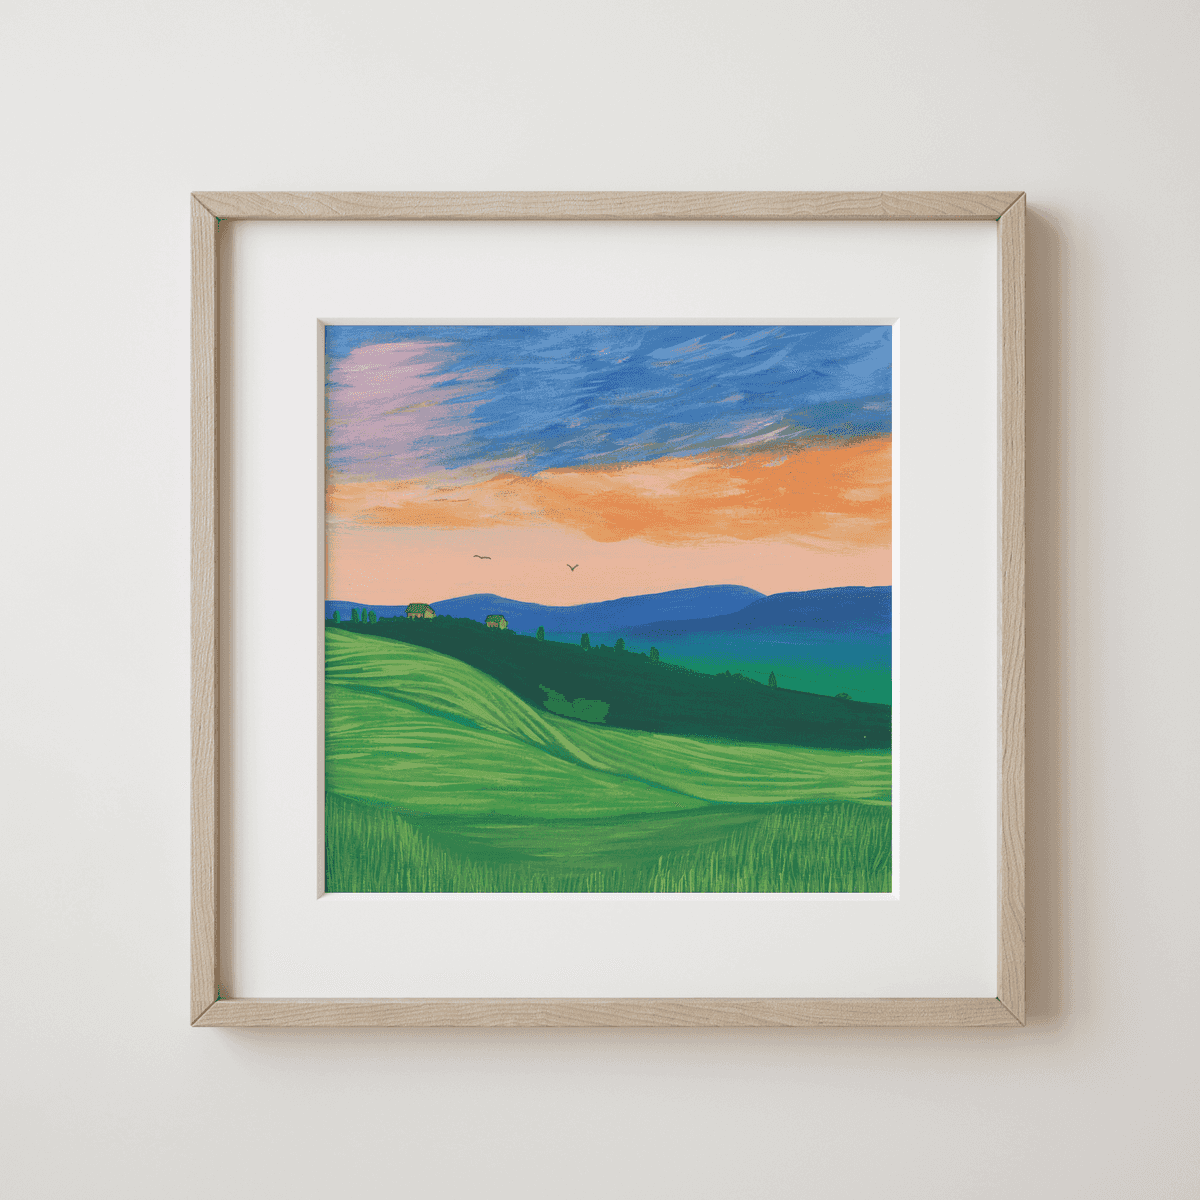 Eider Soundscape - Sunset Bliss over Rolling Hills and Distant Mountains Fine Art Print - nature soundscape art - earth.fm